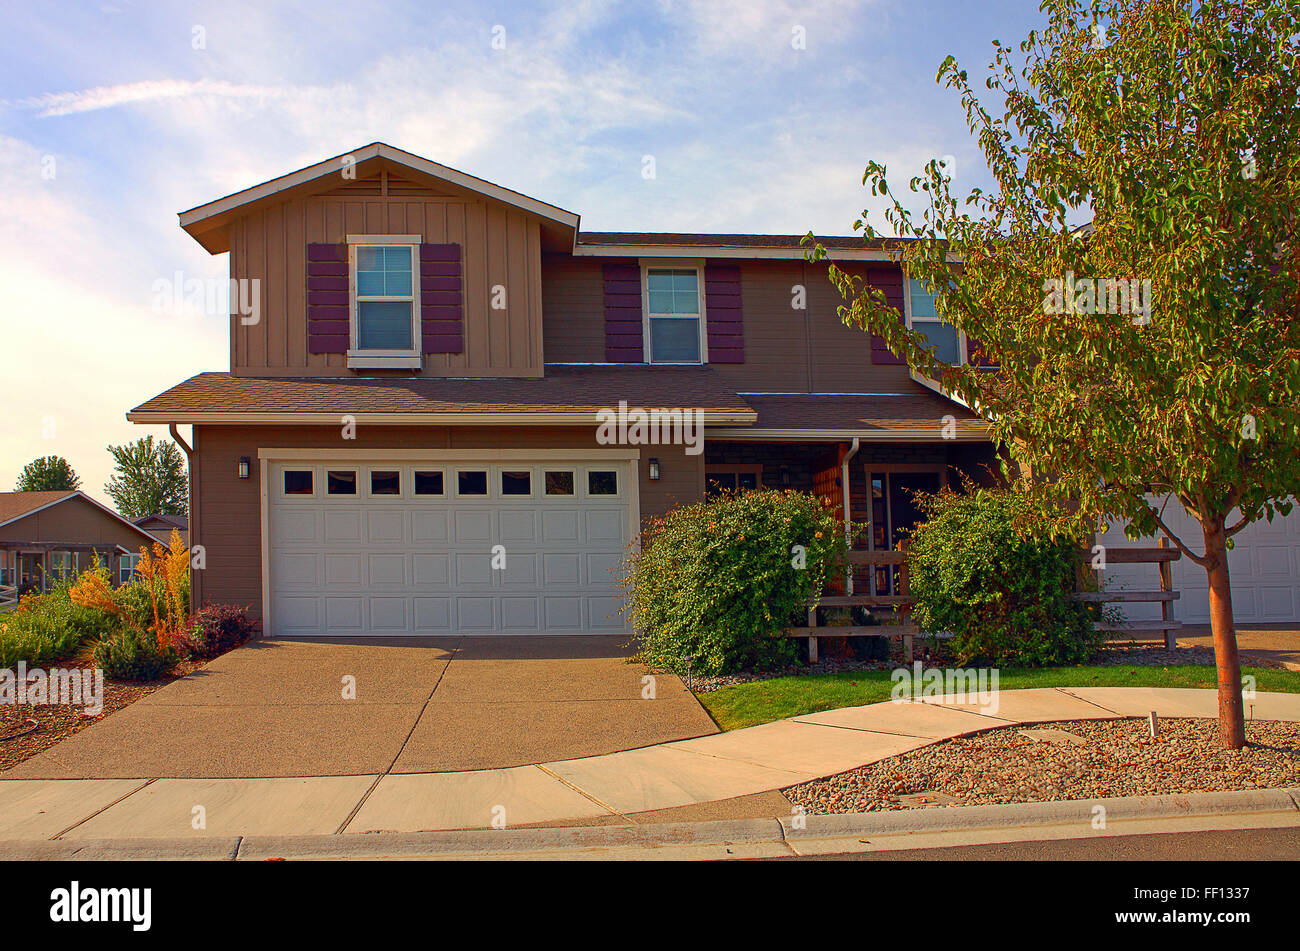 House and driveway in suburban neighborhood Stock Photo